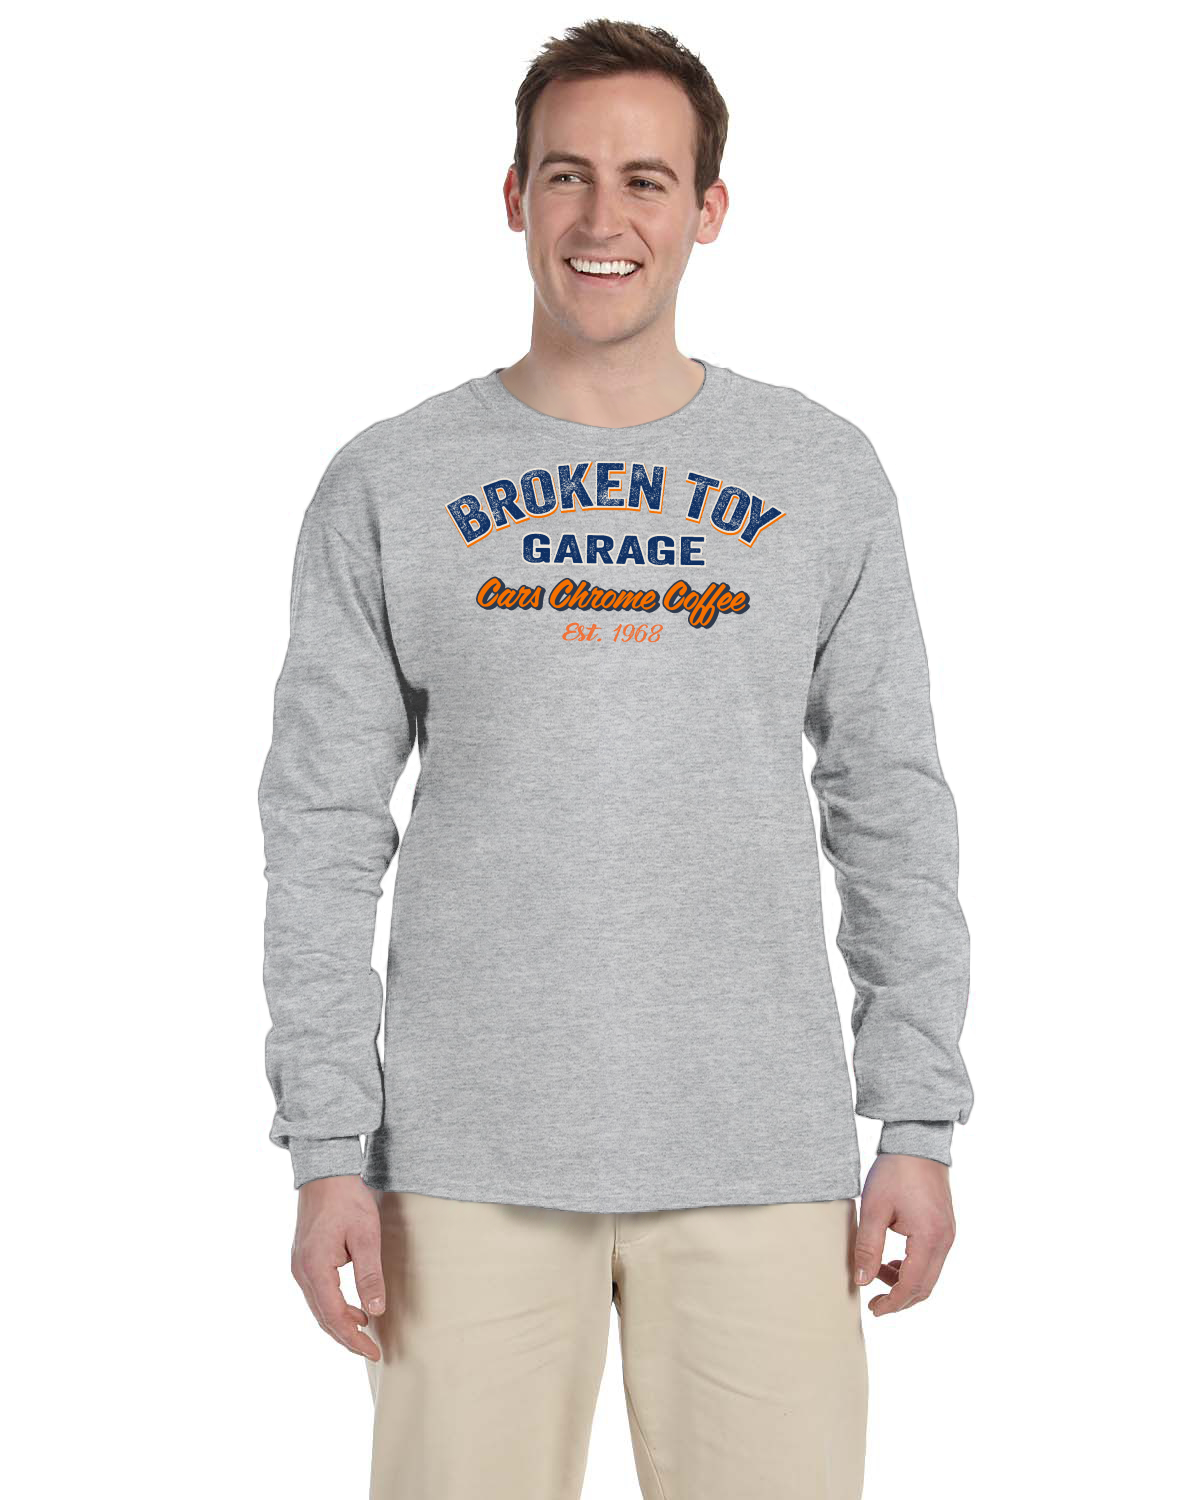 Broken Toy Garage Adult Long-Sleeve T-Shirt